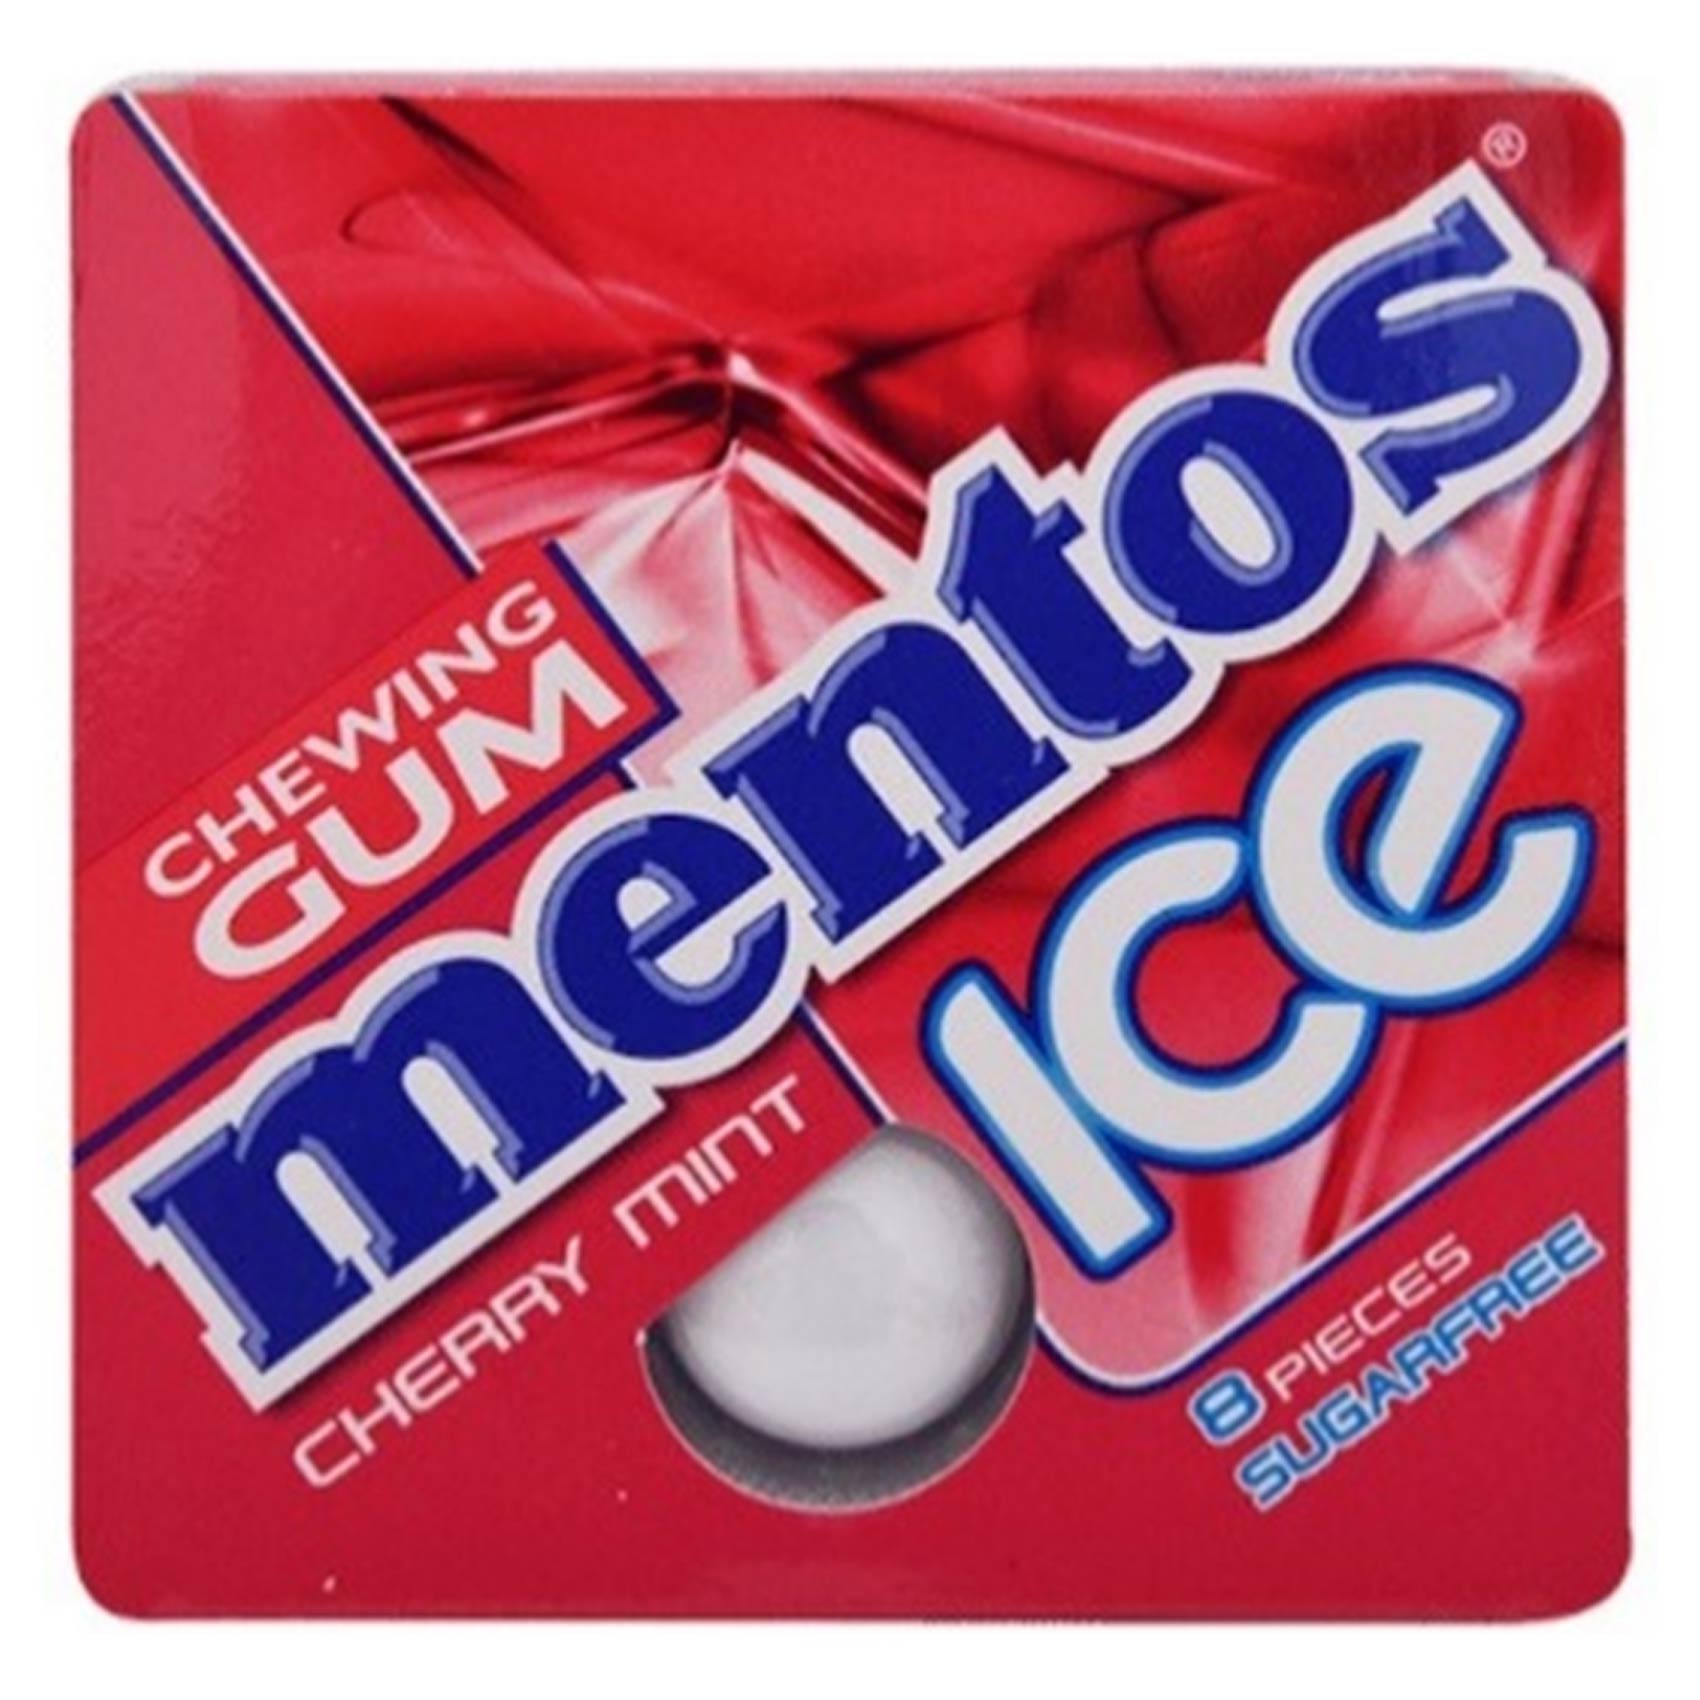 Mentos Ice Sugar Free Cherrymint Chewing Gum 120GR